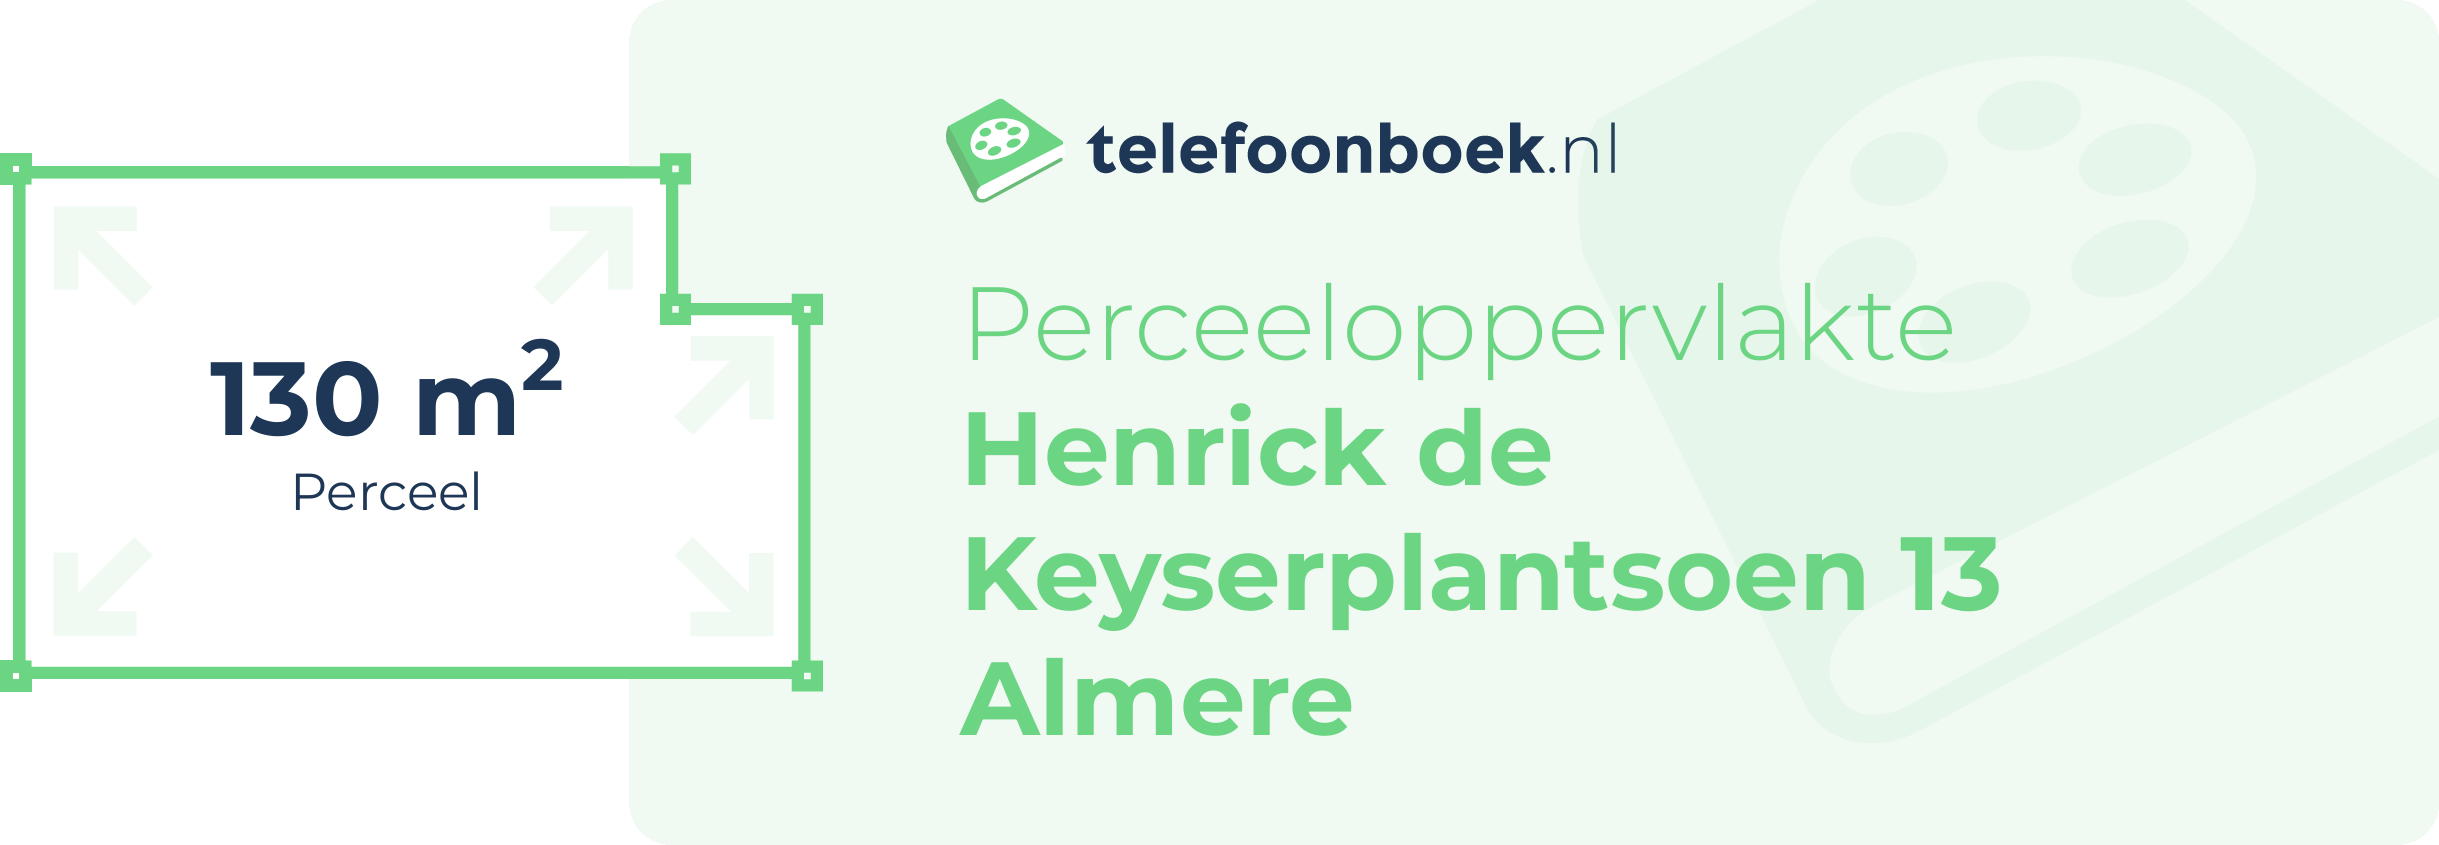 Perceeloppervlakte Henrick De Keyserplantsoen 13 Almere